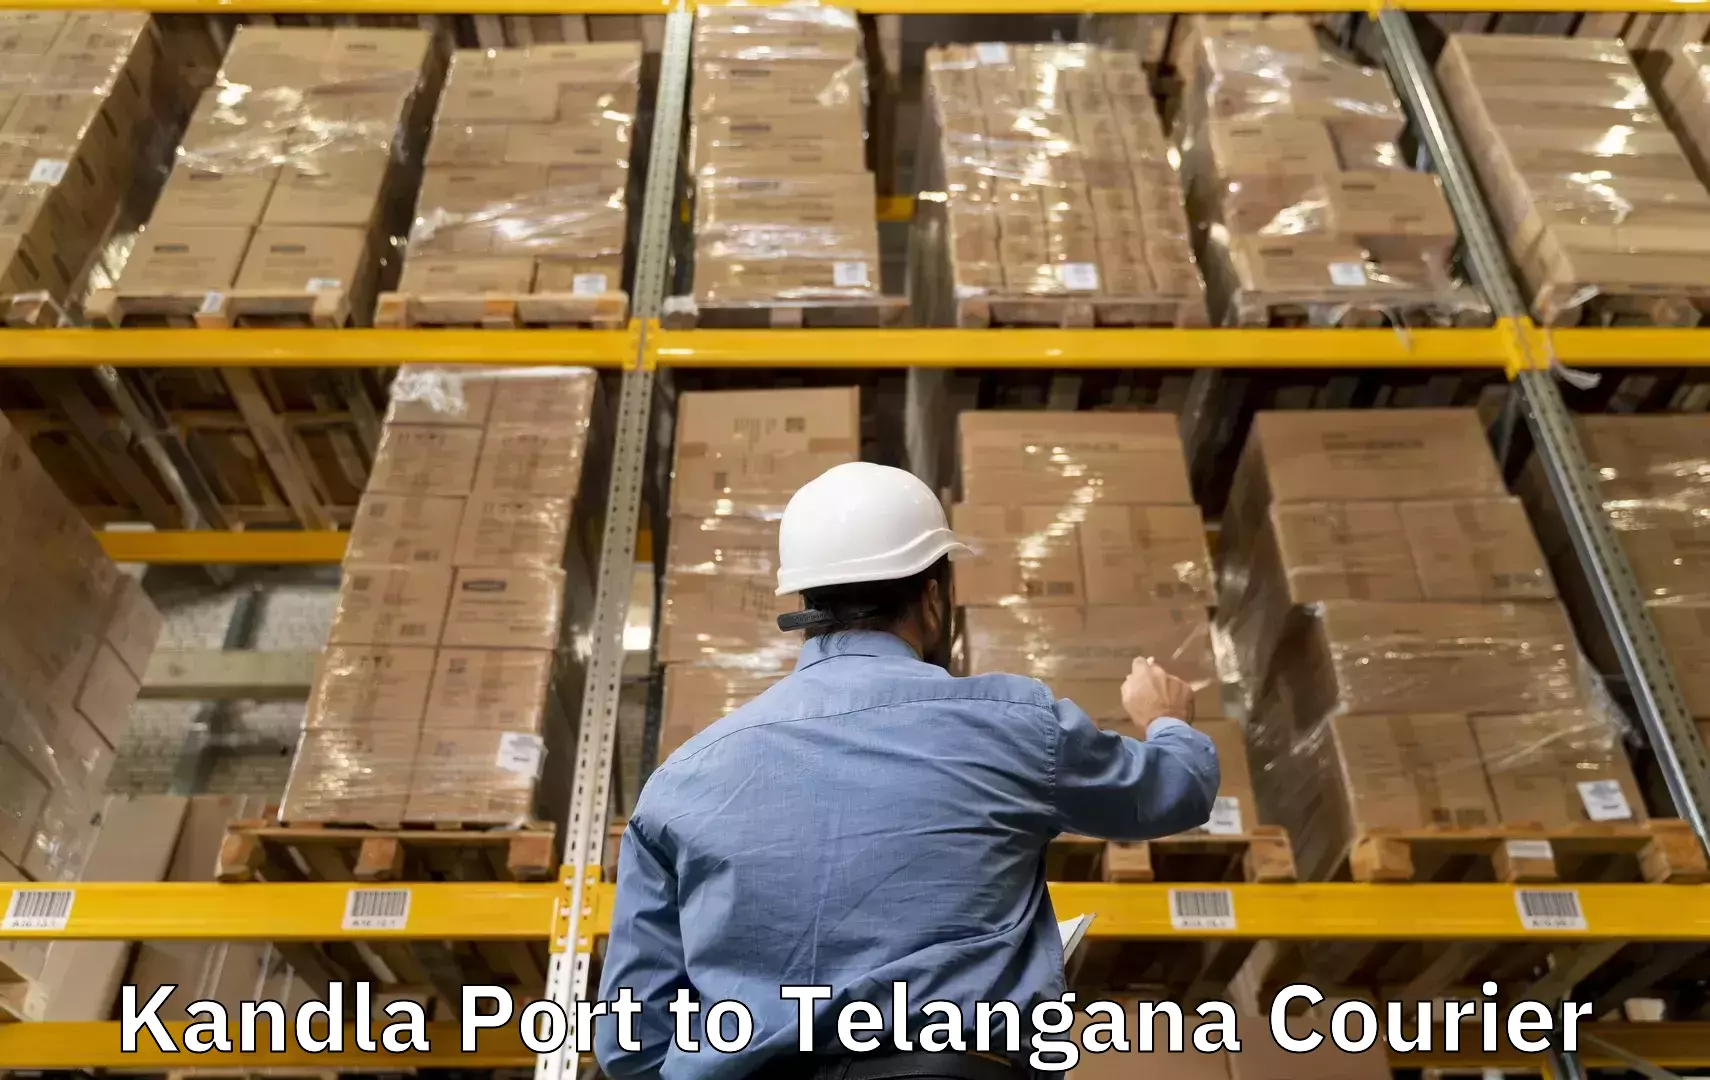 Baggage relocation service Kandla Port to Narmetta